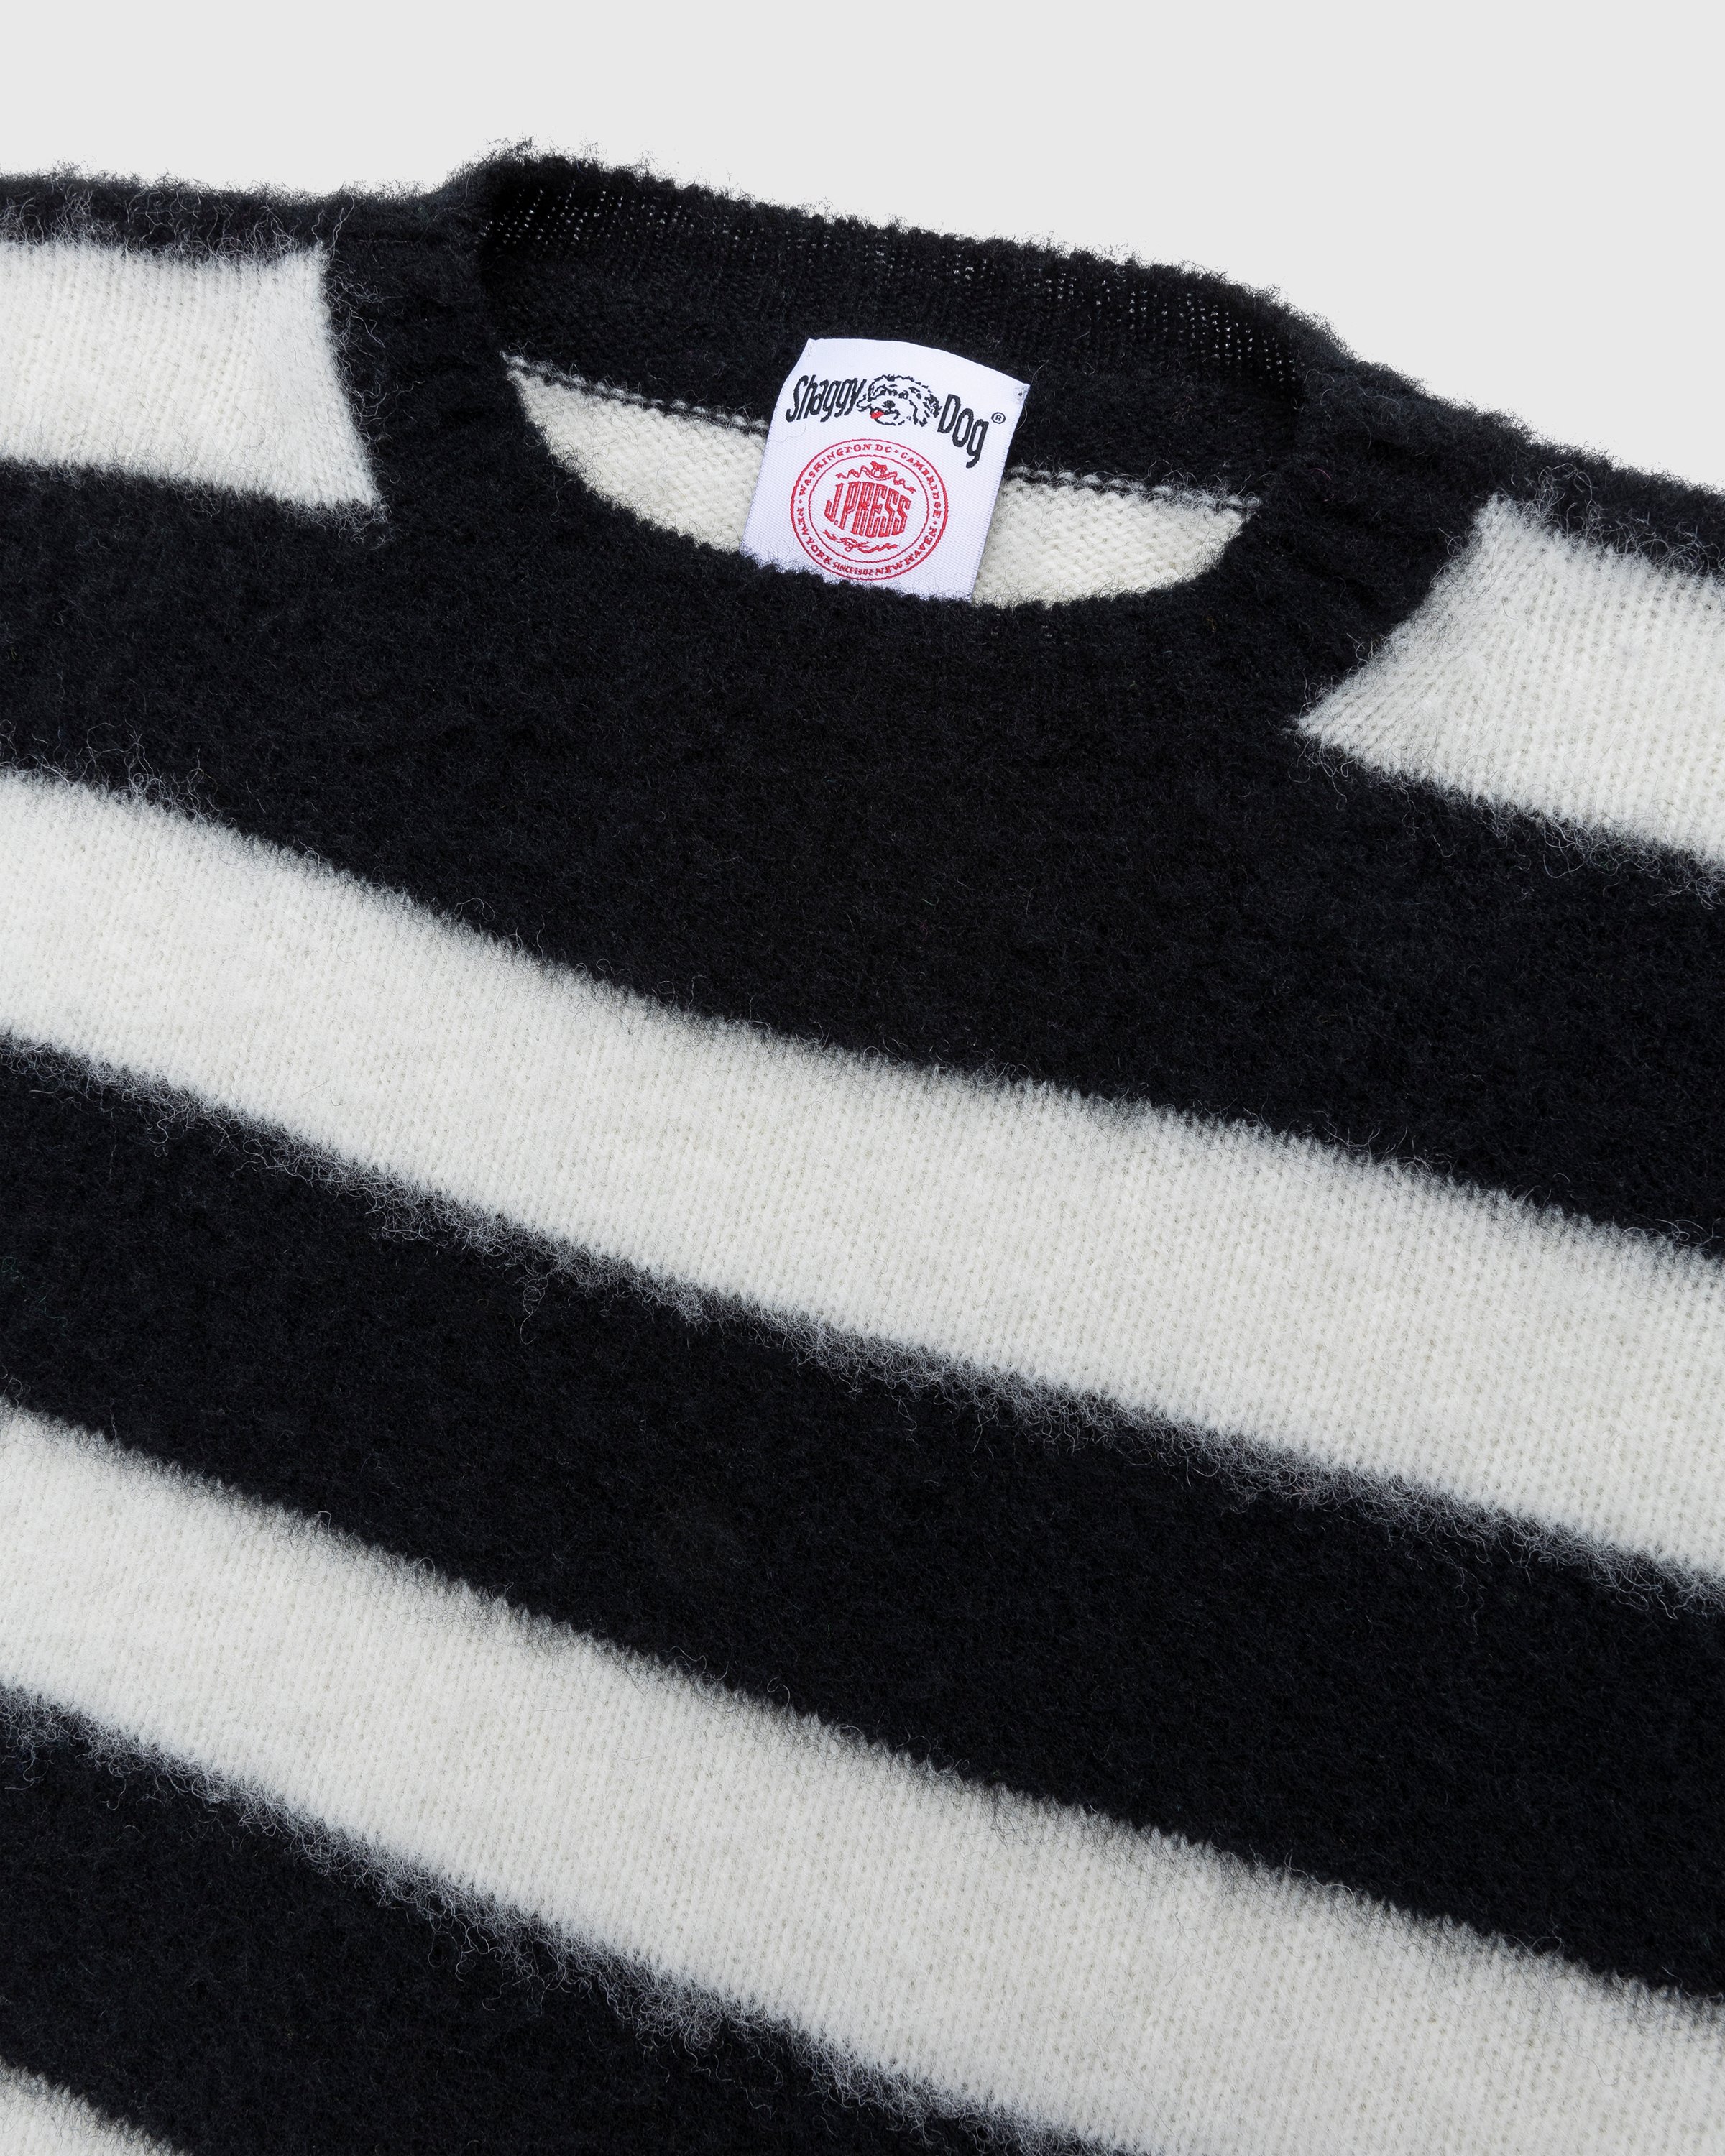 J. Press x Highsnobiety - Shaggy Dog Stripe Sweater Black/Cream - Clothing - Multi - Image 3